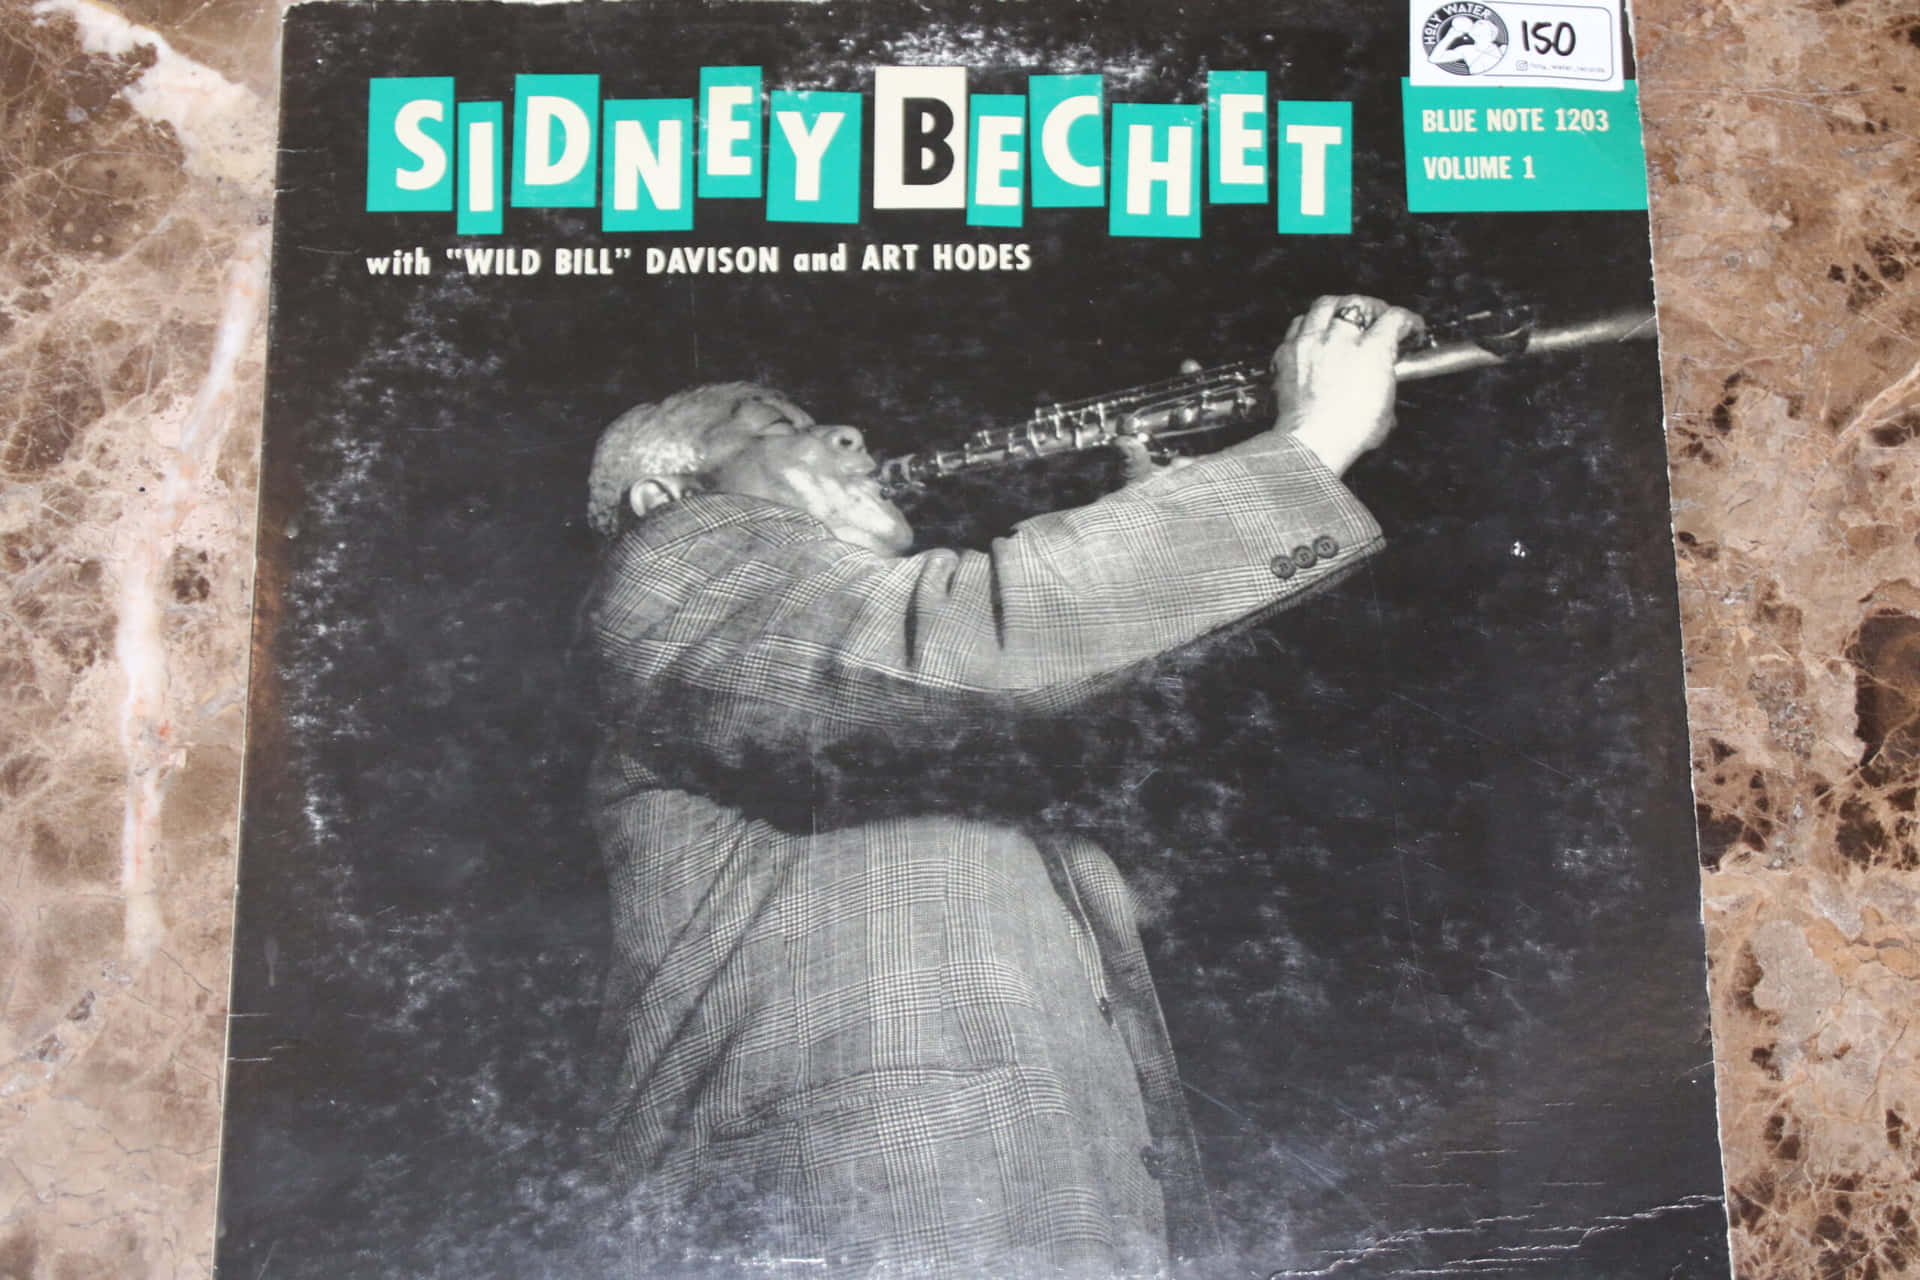 Sidneybechet: Kolossale Jazzlegende Auf Dem Cover Wallpaper